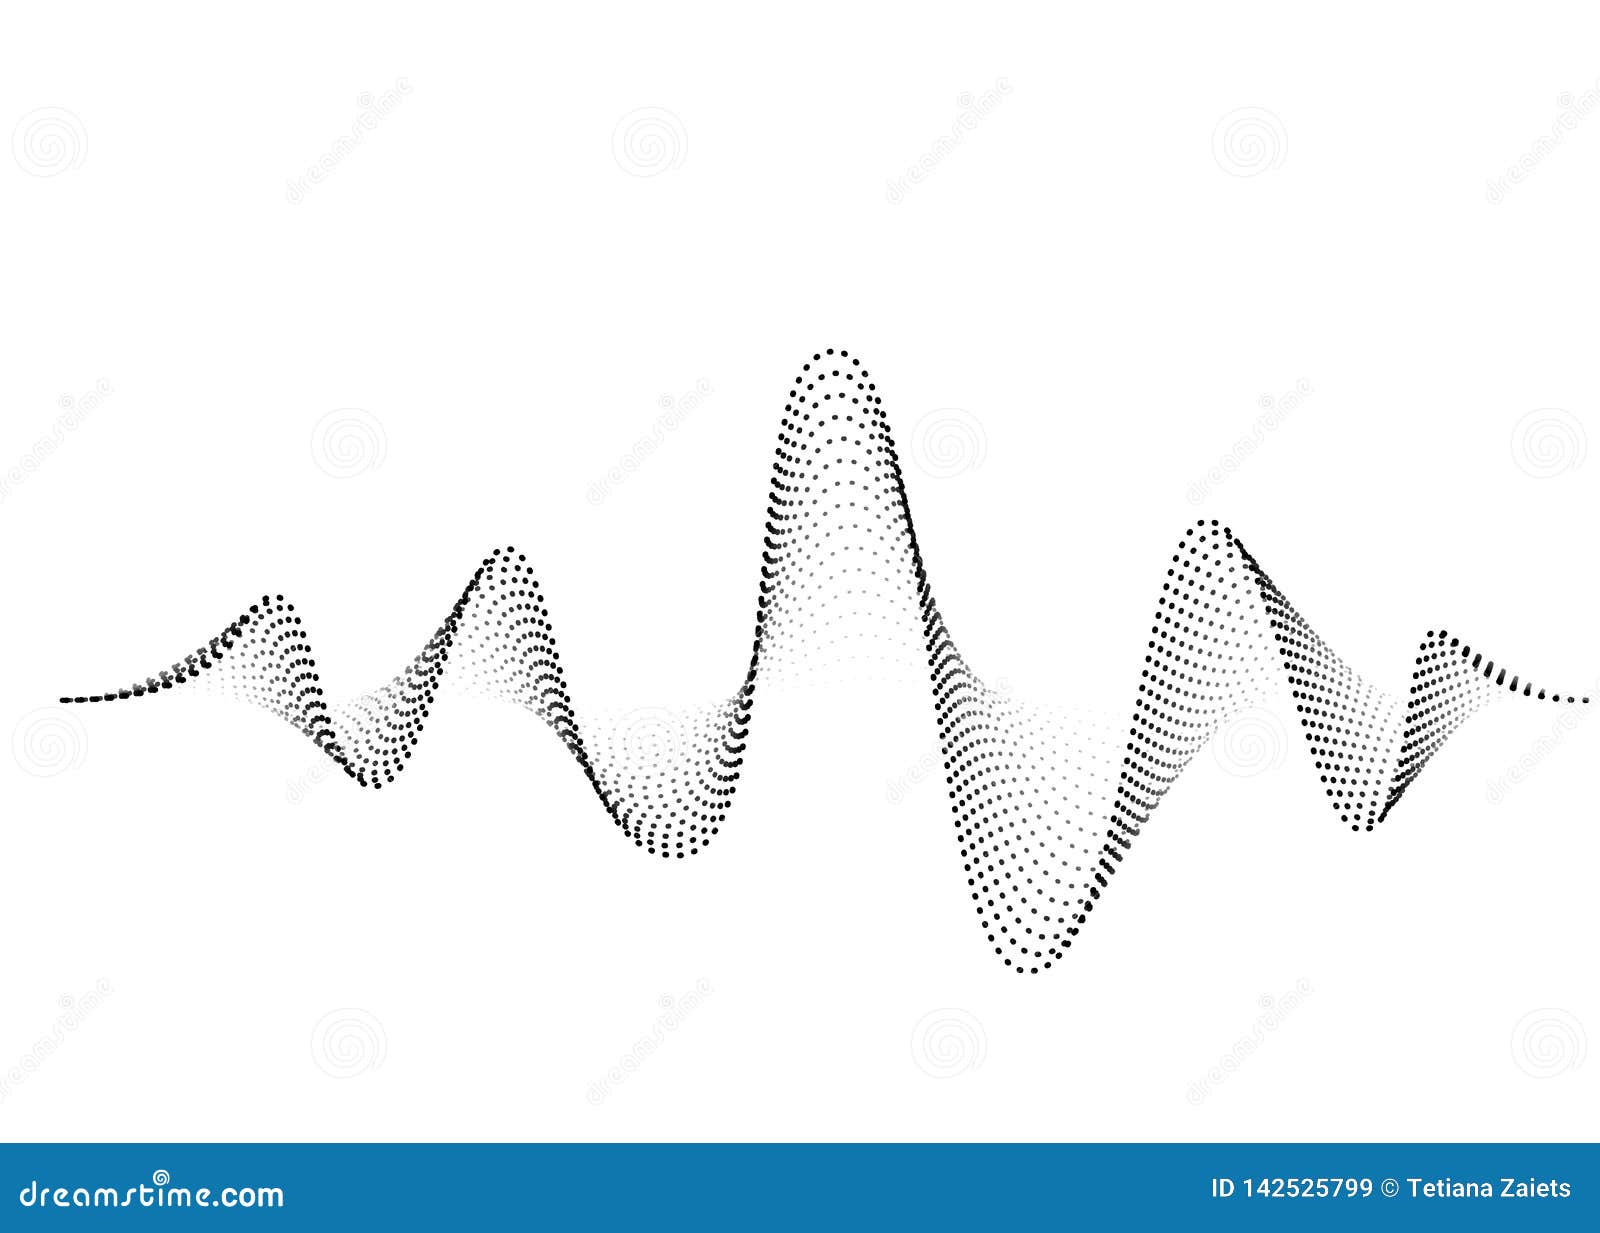 sound wave  background. audio music soundwave. voice frequency form . vibration beats in waveform